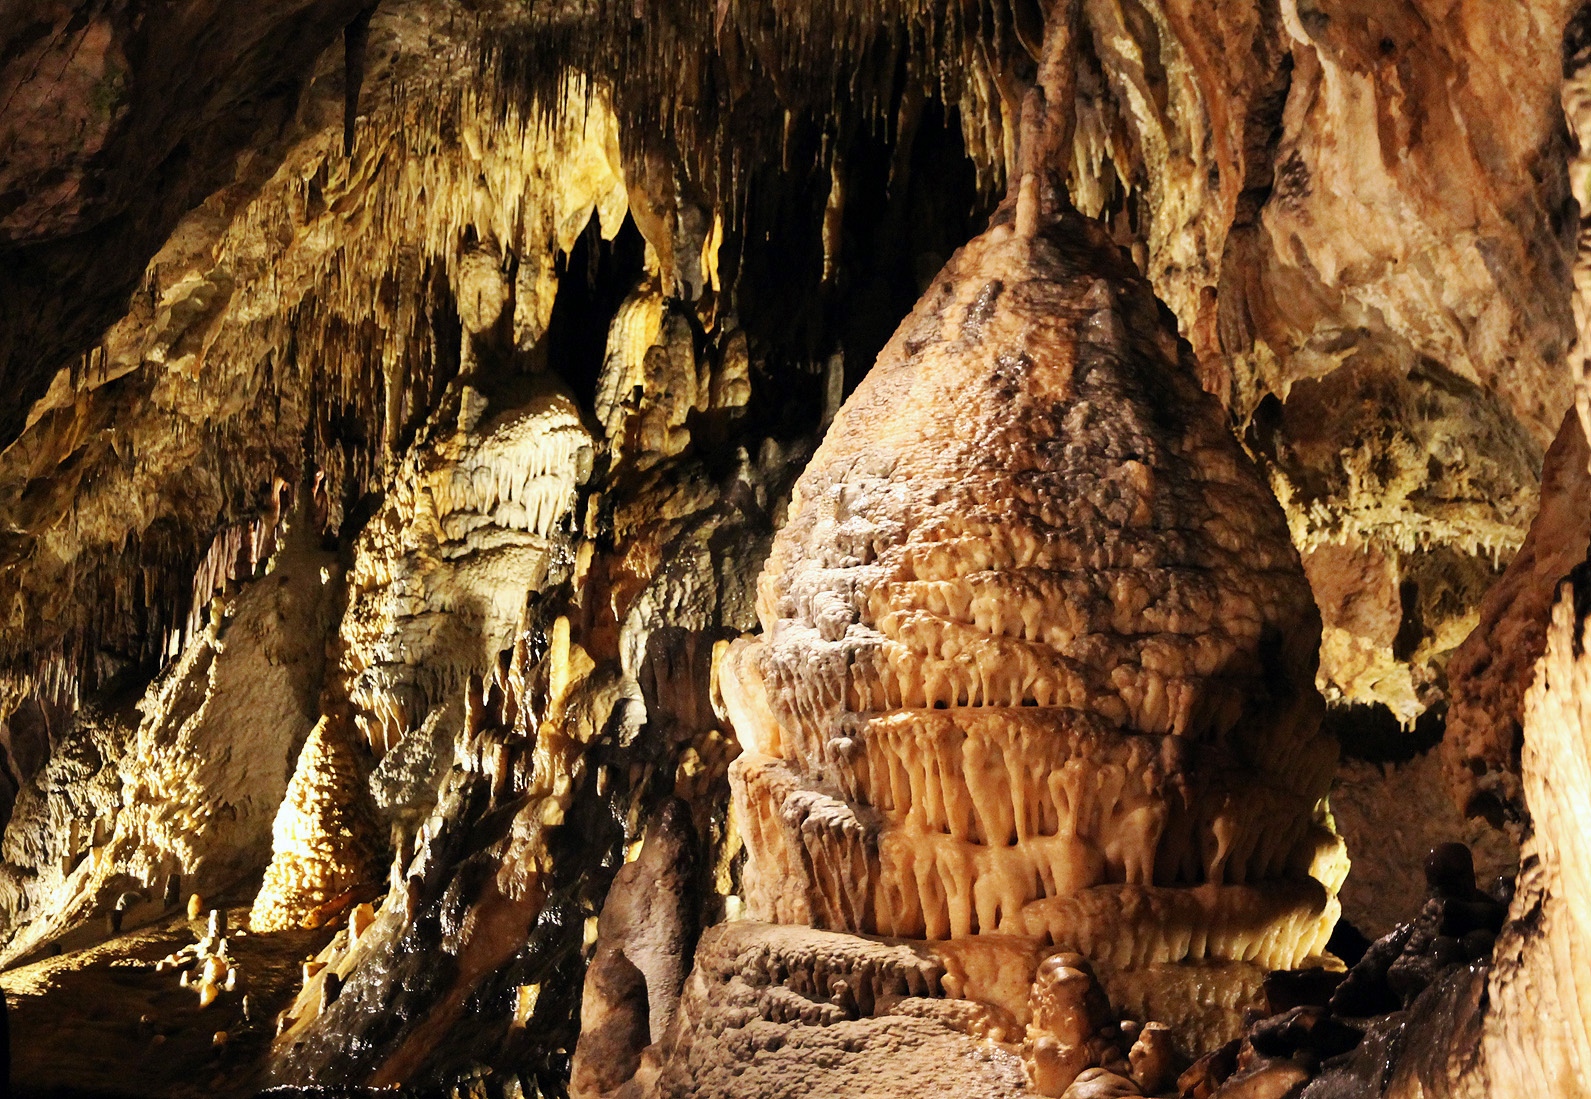 Dome-shaped stalagmite.